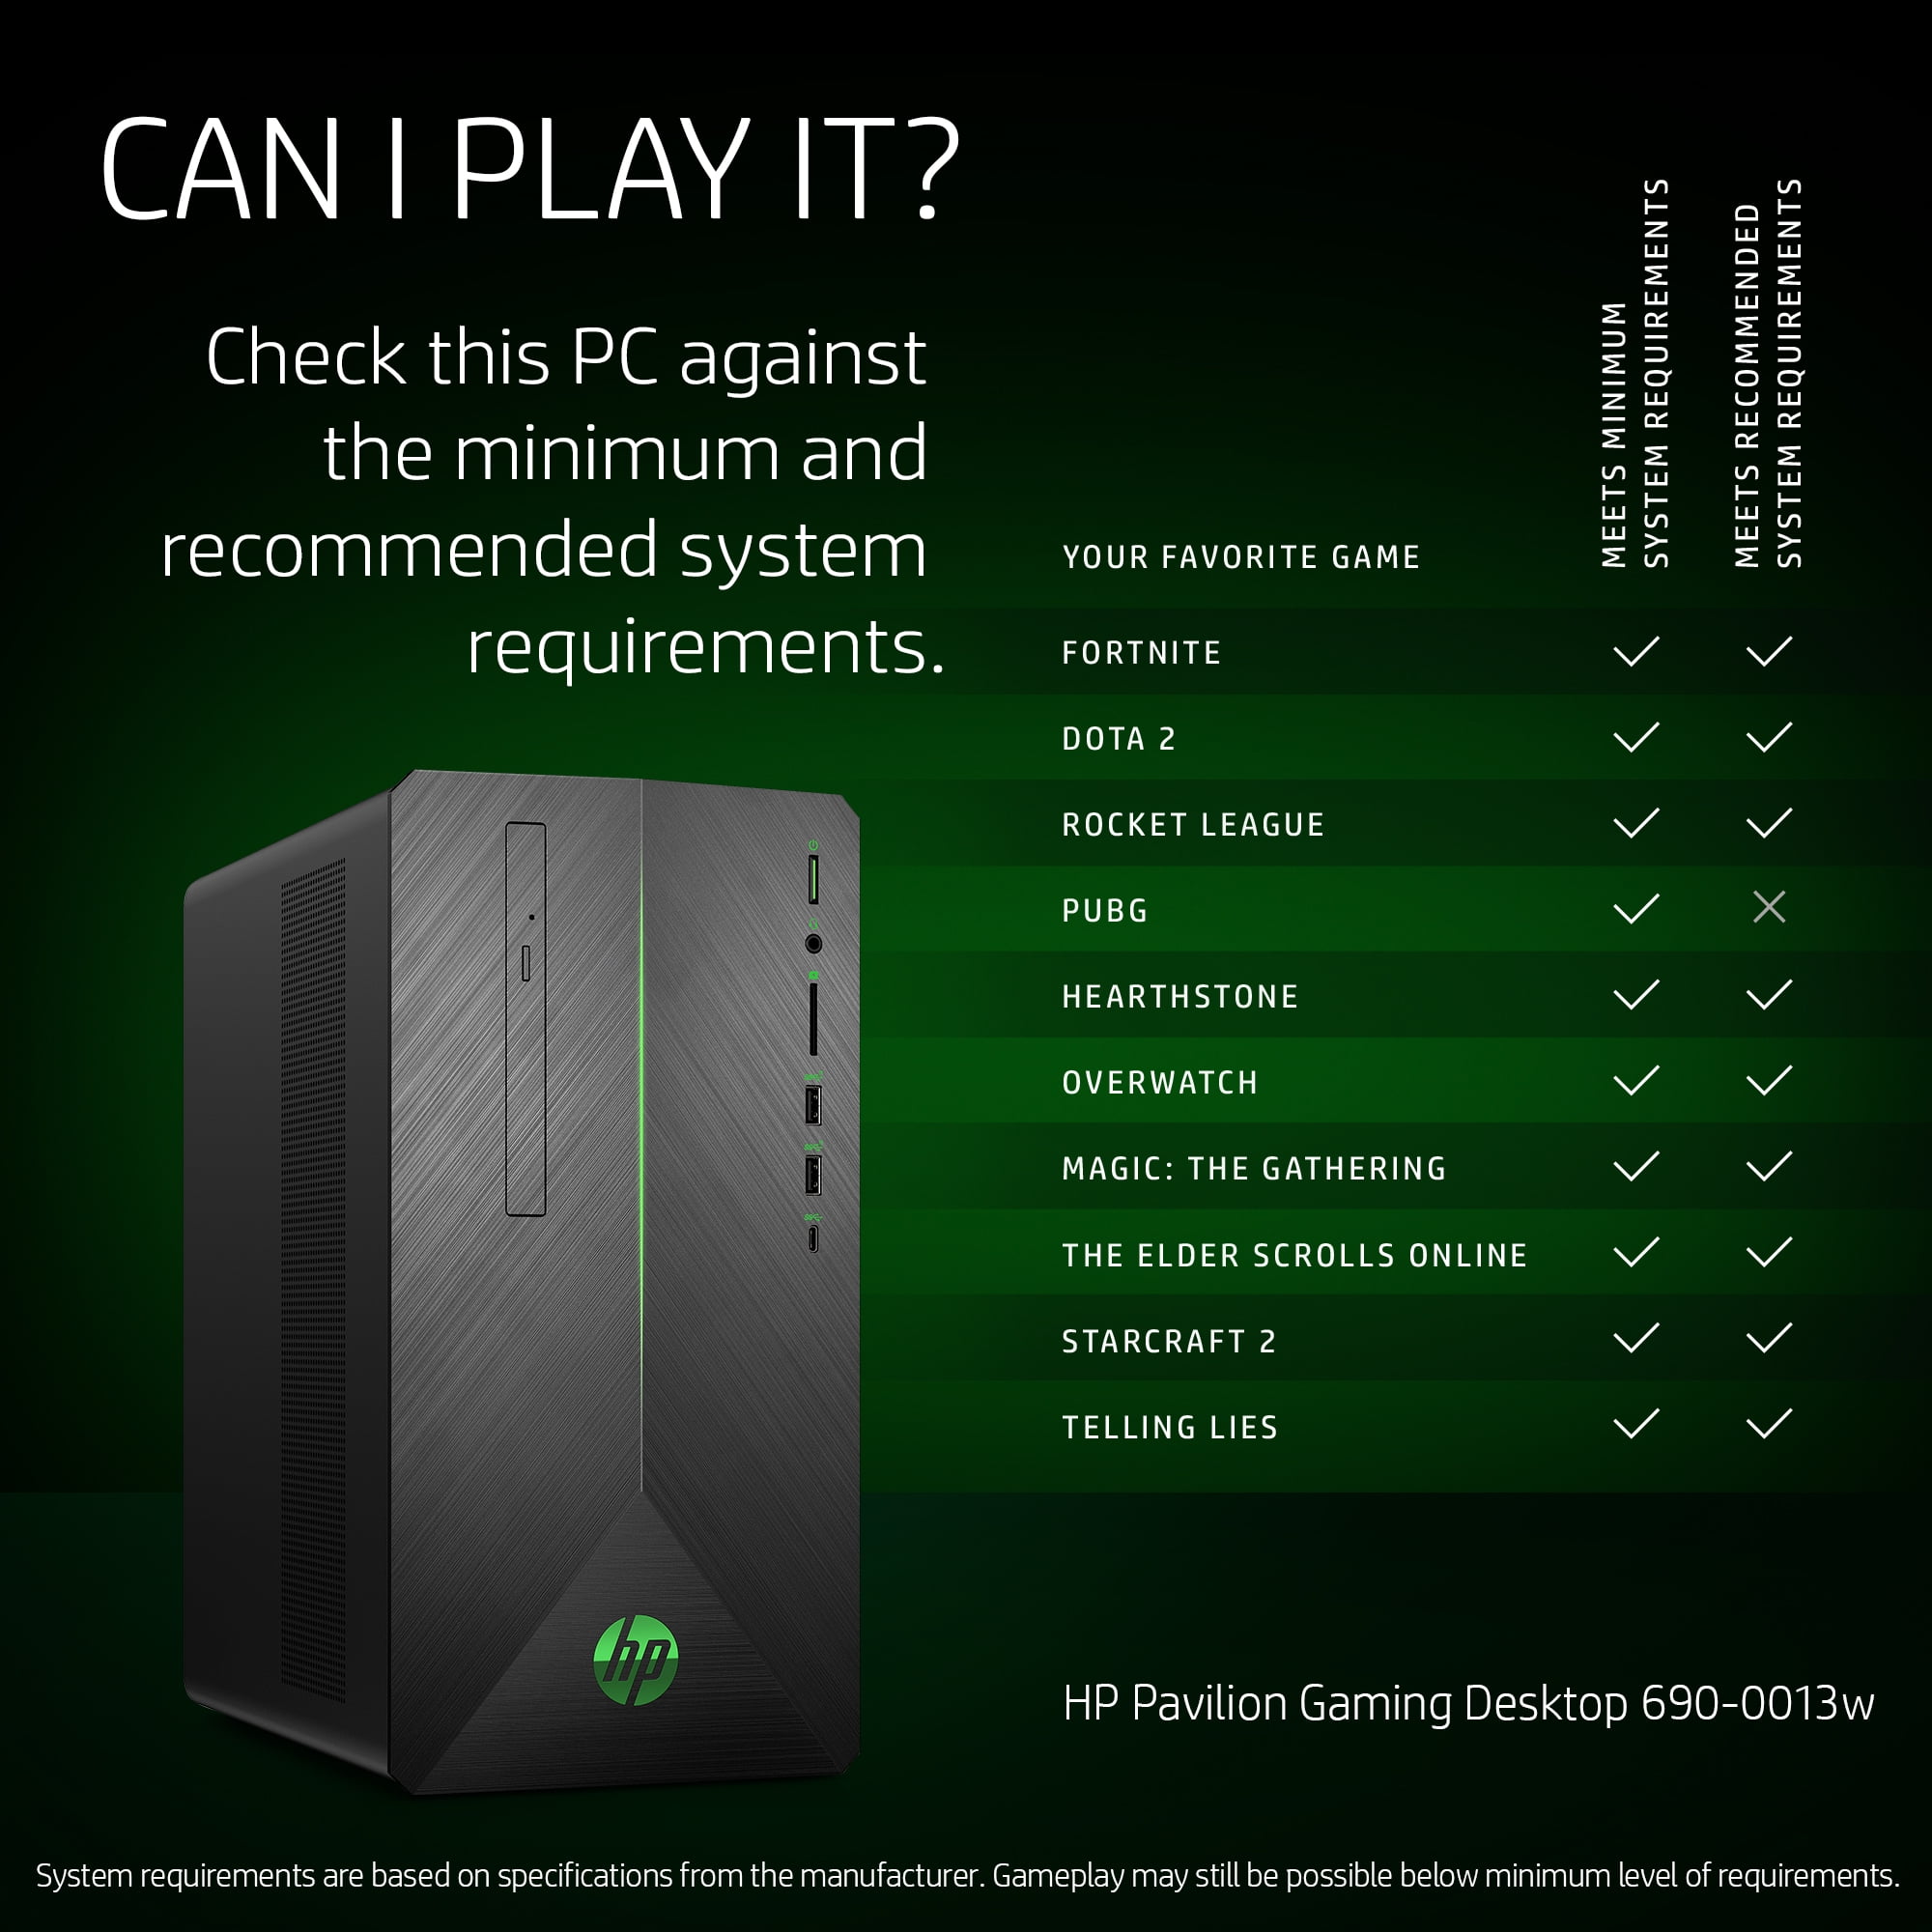 HP Gaming Desktop AMD Ryzen 5 2400G, 1050 GPU 1TB Storage, 8GB - 690-0013w - Walmart.com